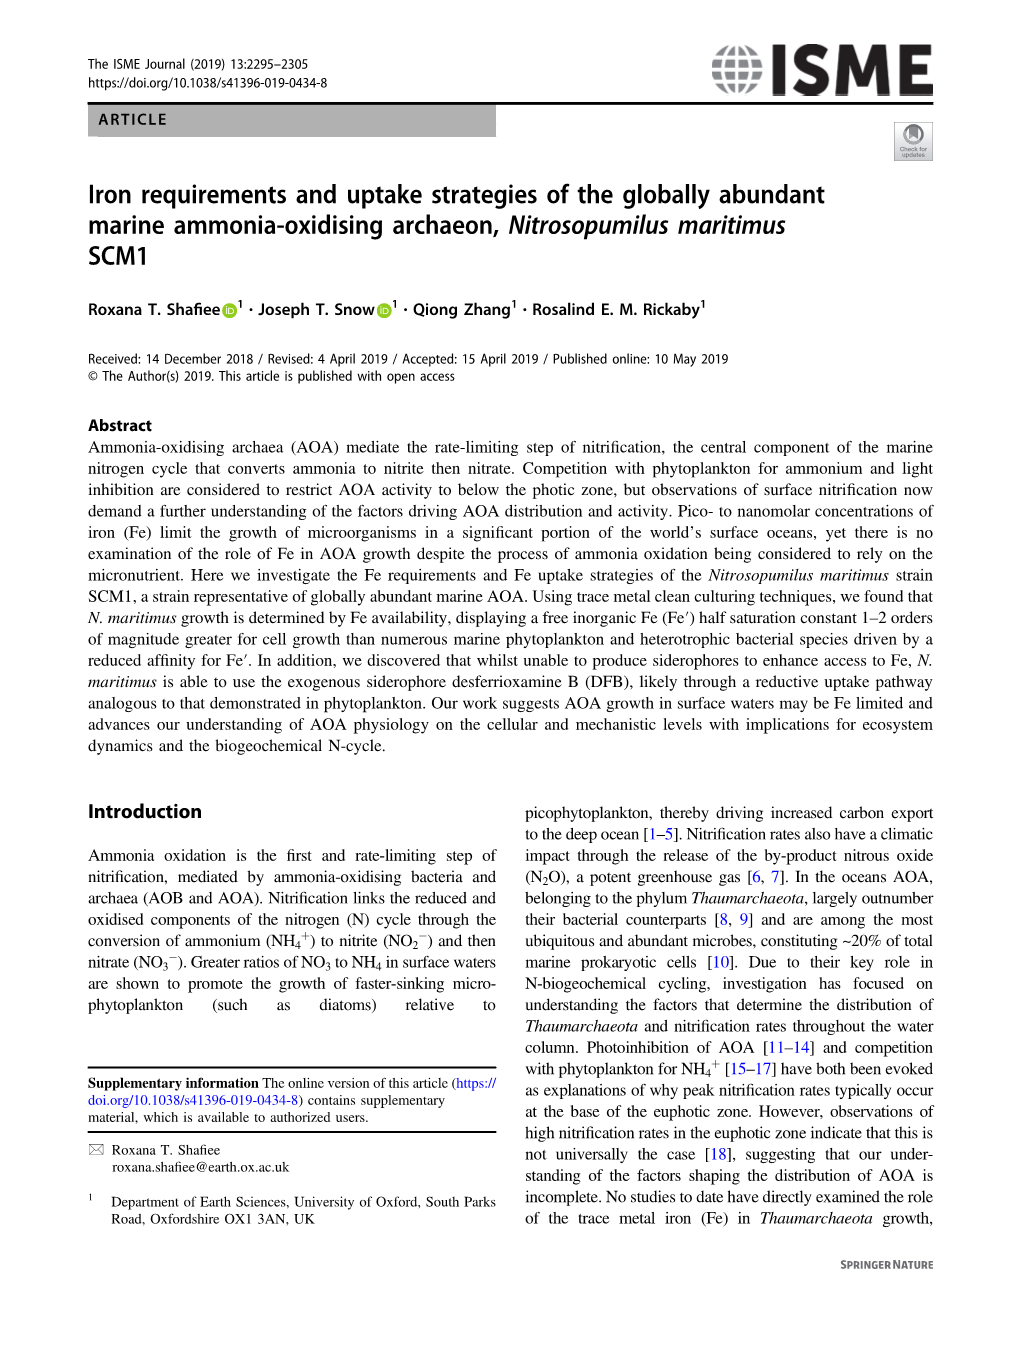 Iron Requirements and Uptake Strategies of the Globally Abundant Marine Ammonia-Oxidising Archaeon, Nitrosopumilus Maritimus SCM1